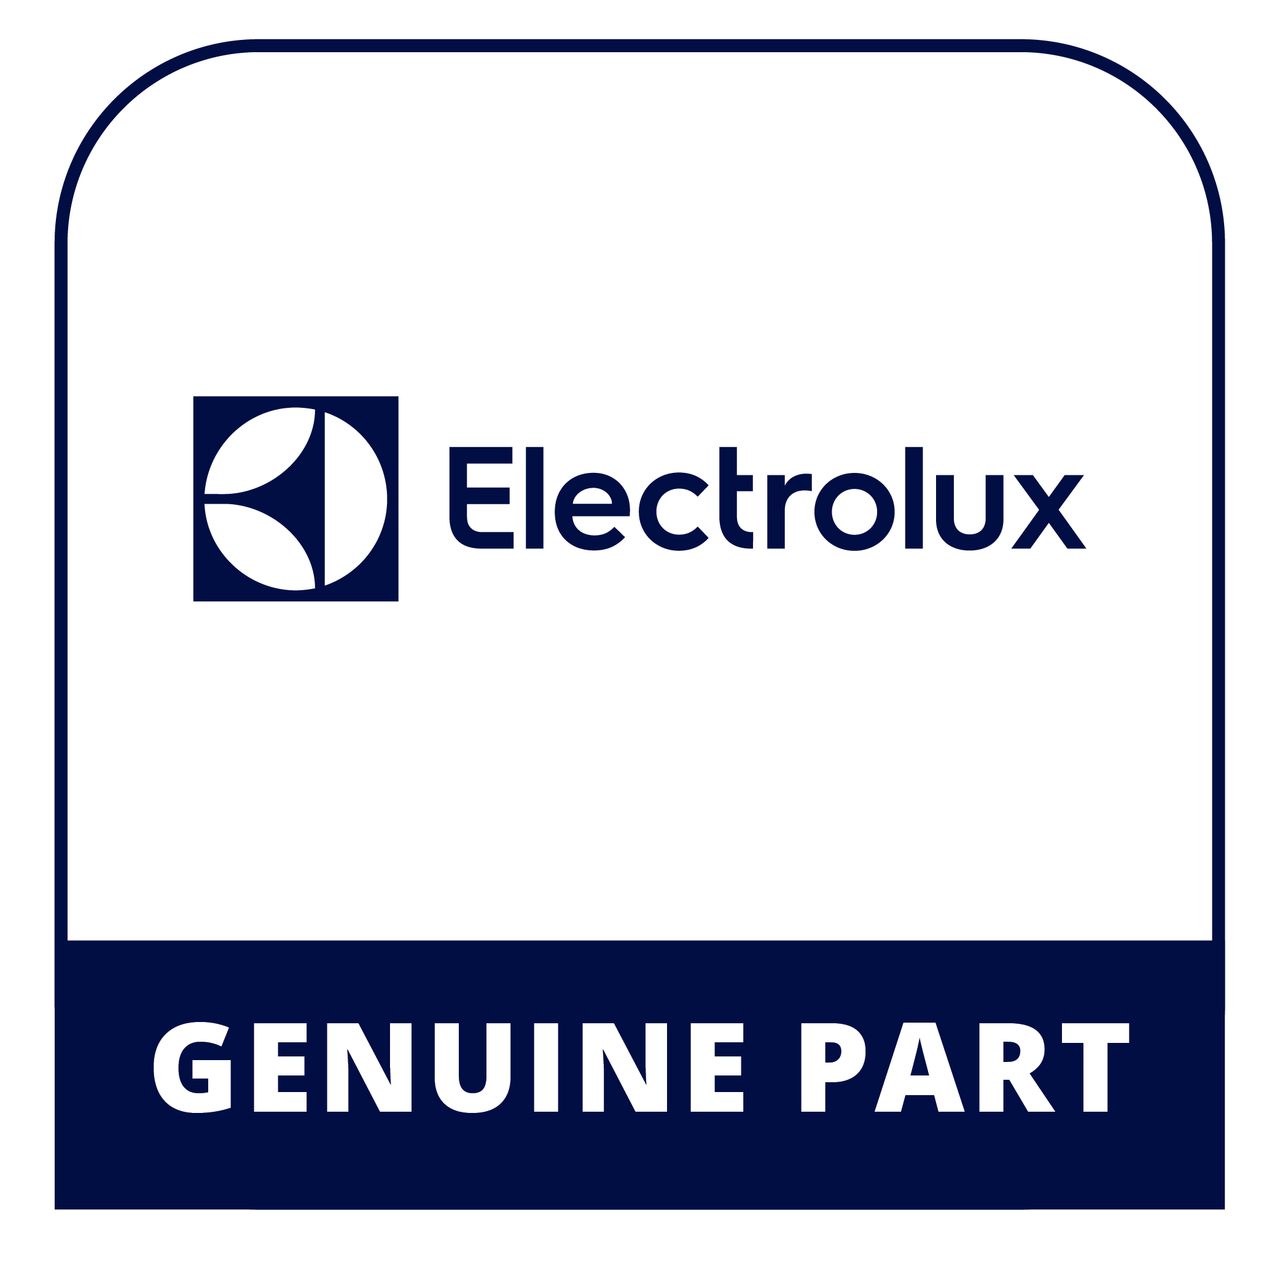 Frigidaire - Electrolux 297163001 Breaker - Genuine Electrolux Part